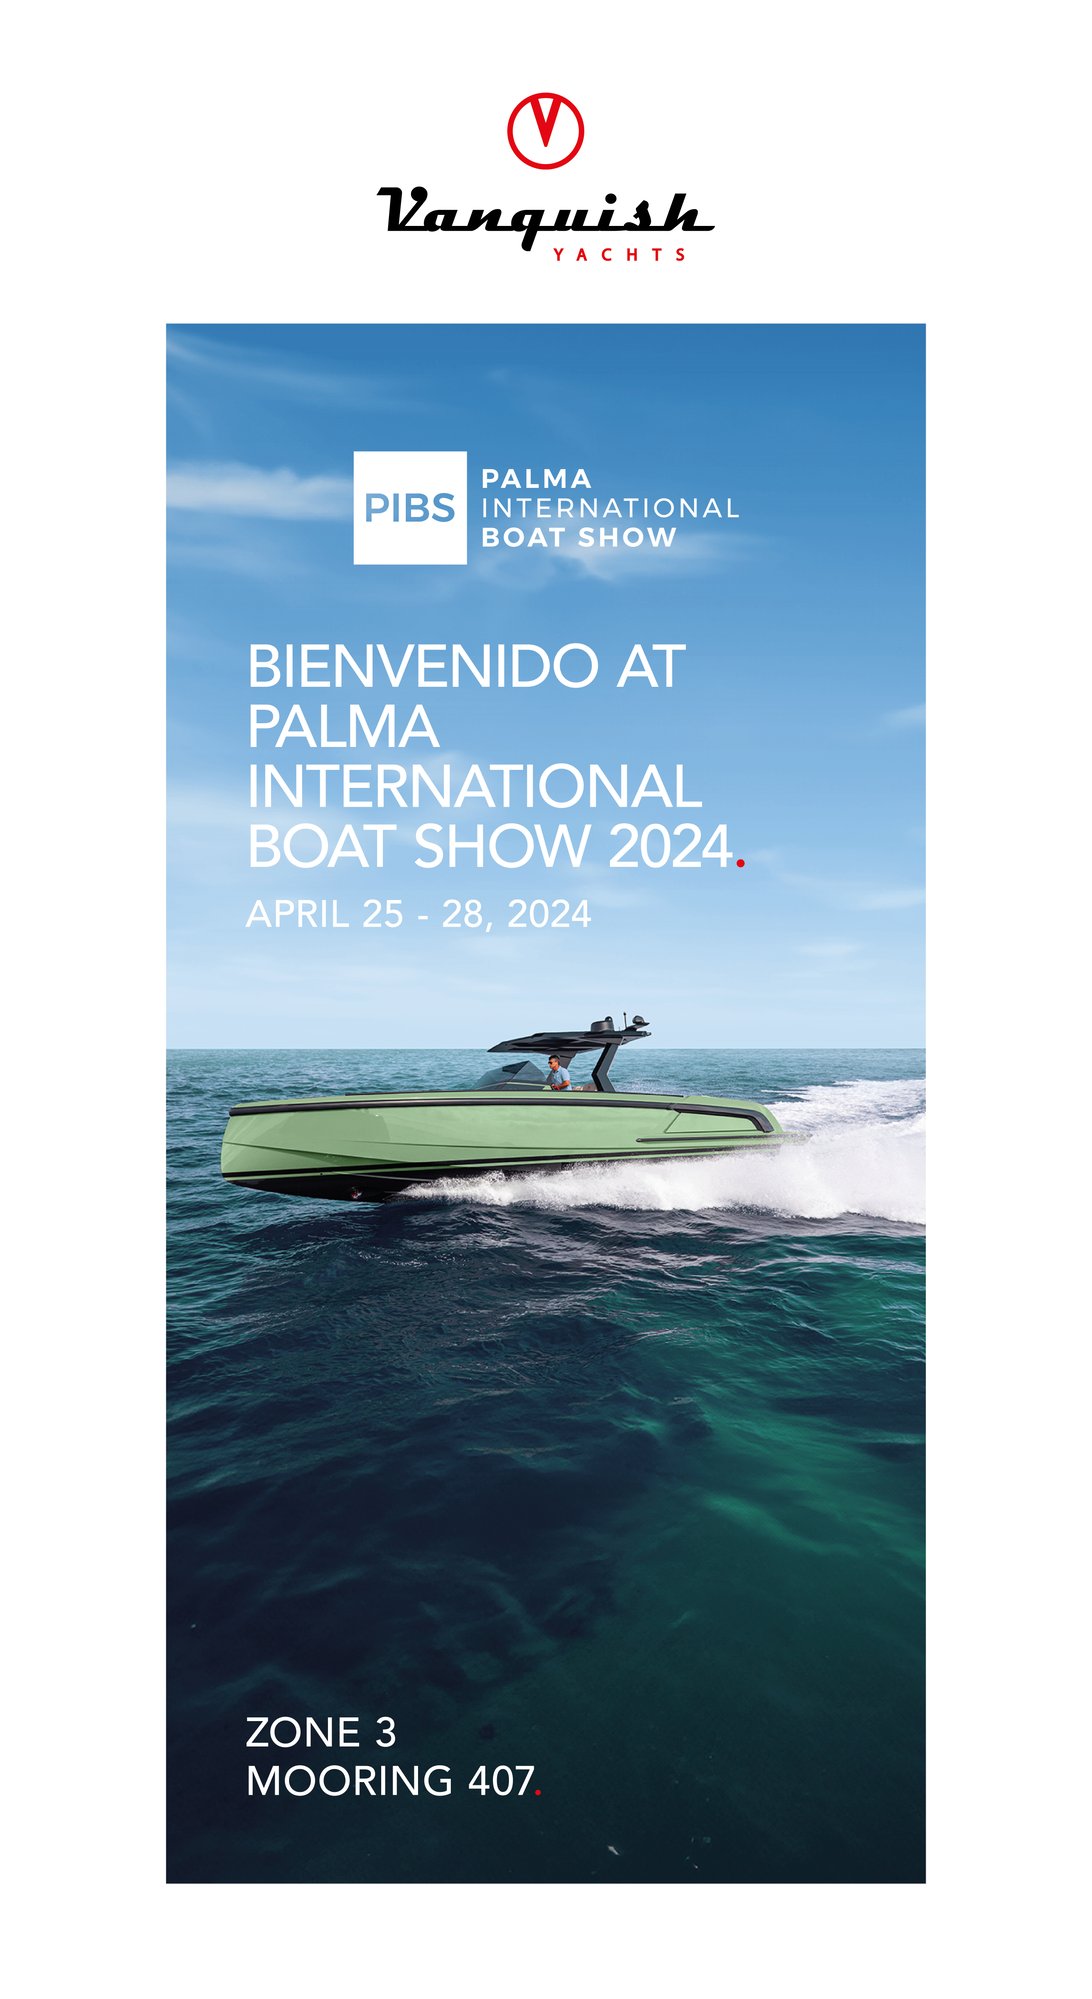 Vanquish Yachts - Palma Boat Show 2024 - e-mailing - Header